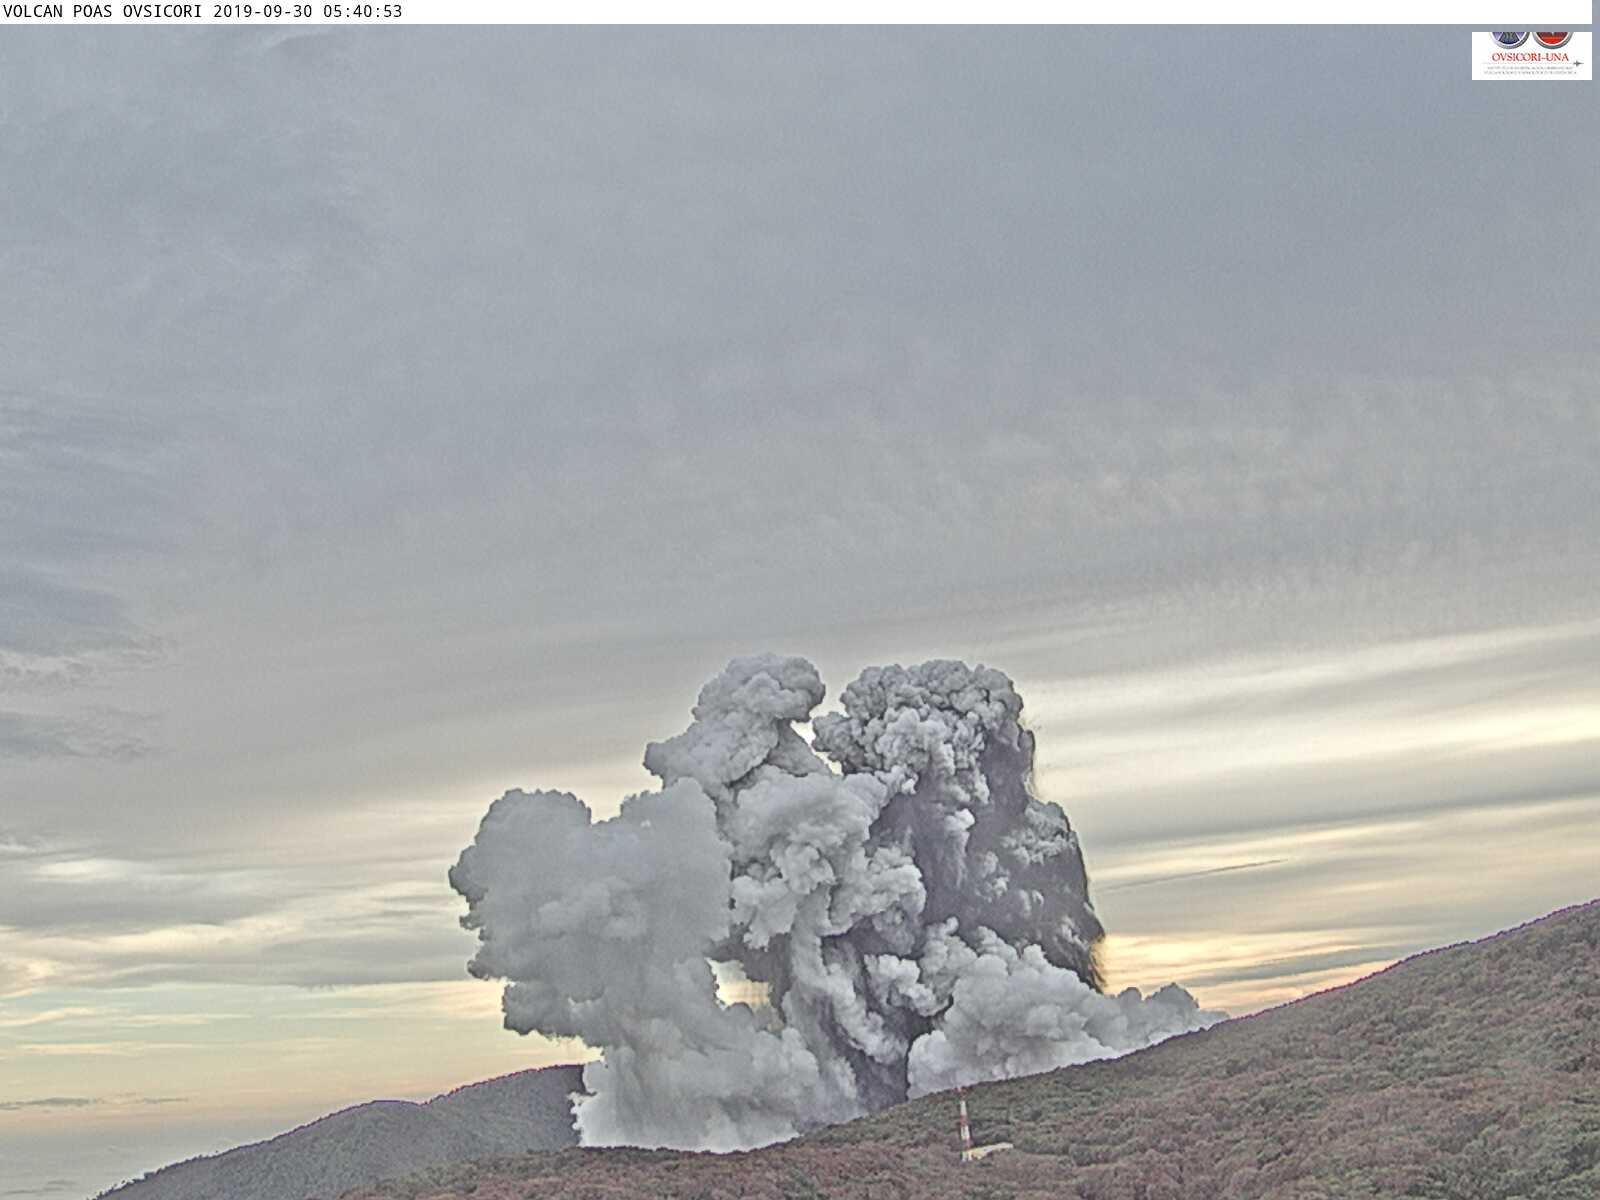 Phreatic eruption at Poás on 30 Sep 2019 (image: OVSICORI_UNA webcam)